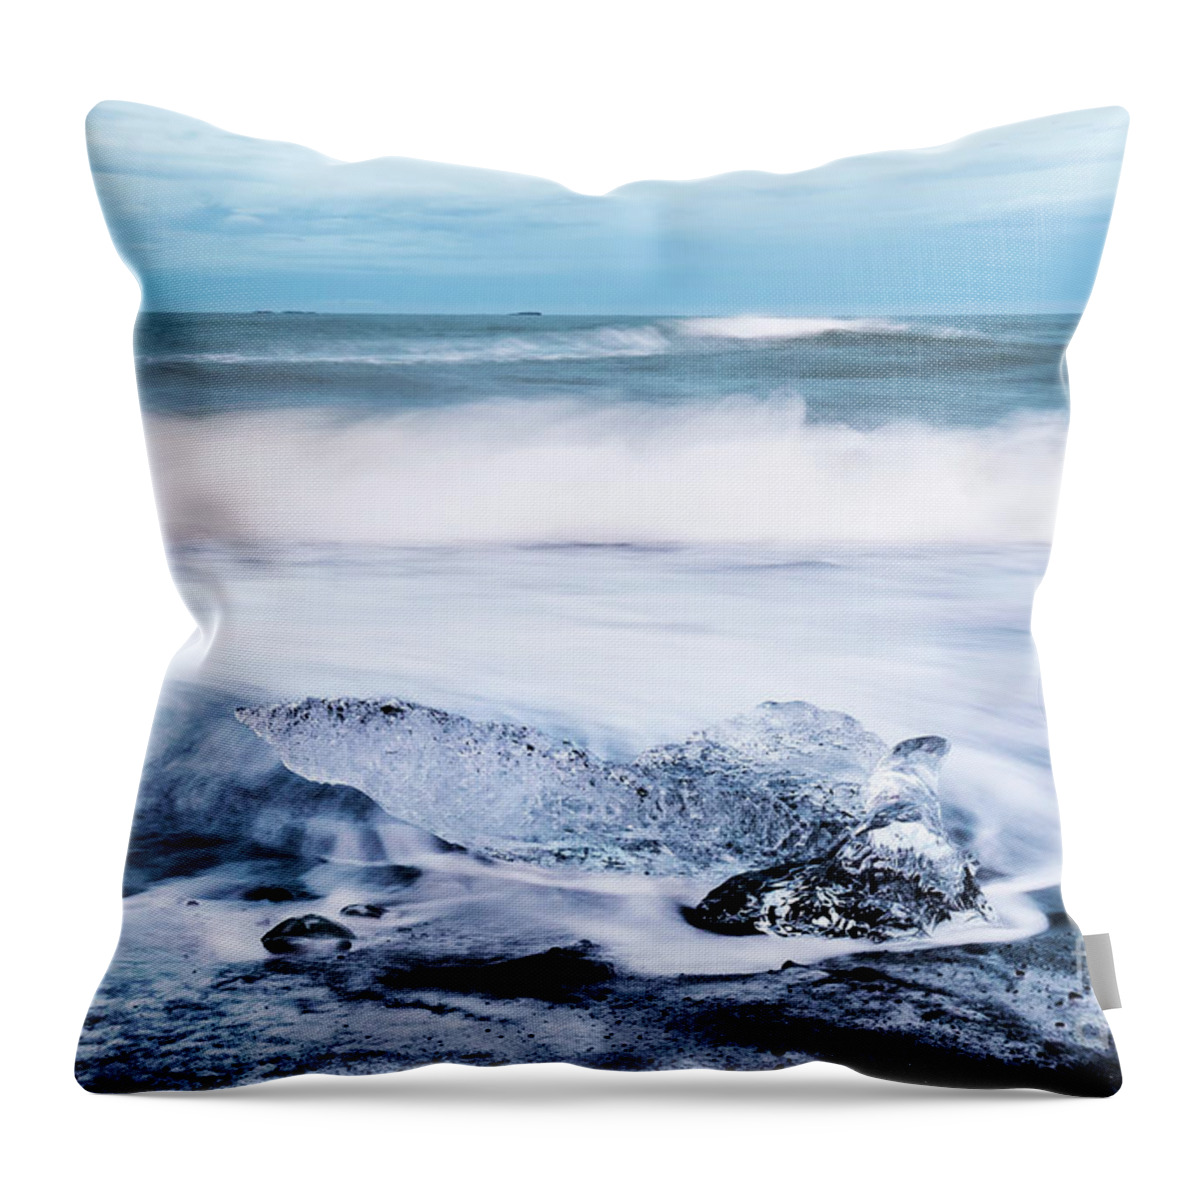 2017 Throw Pillow featuring the photograph Demanta beach iceland by Gunnar Orn Arnason